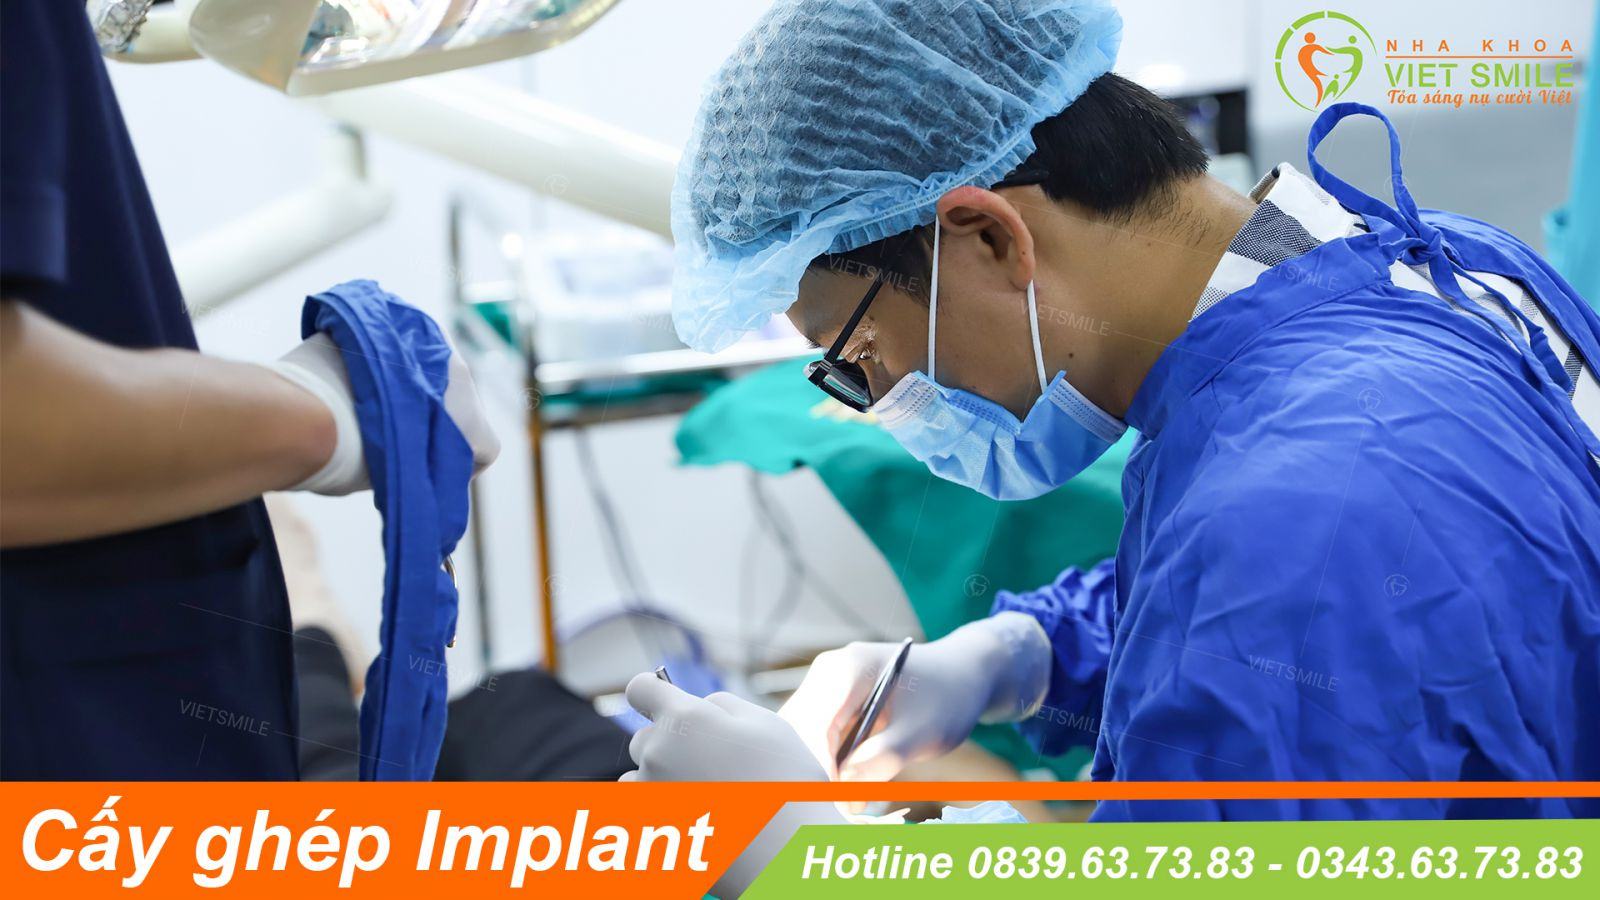 Implant nha khoa